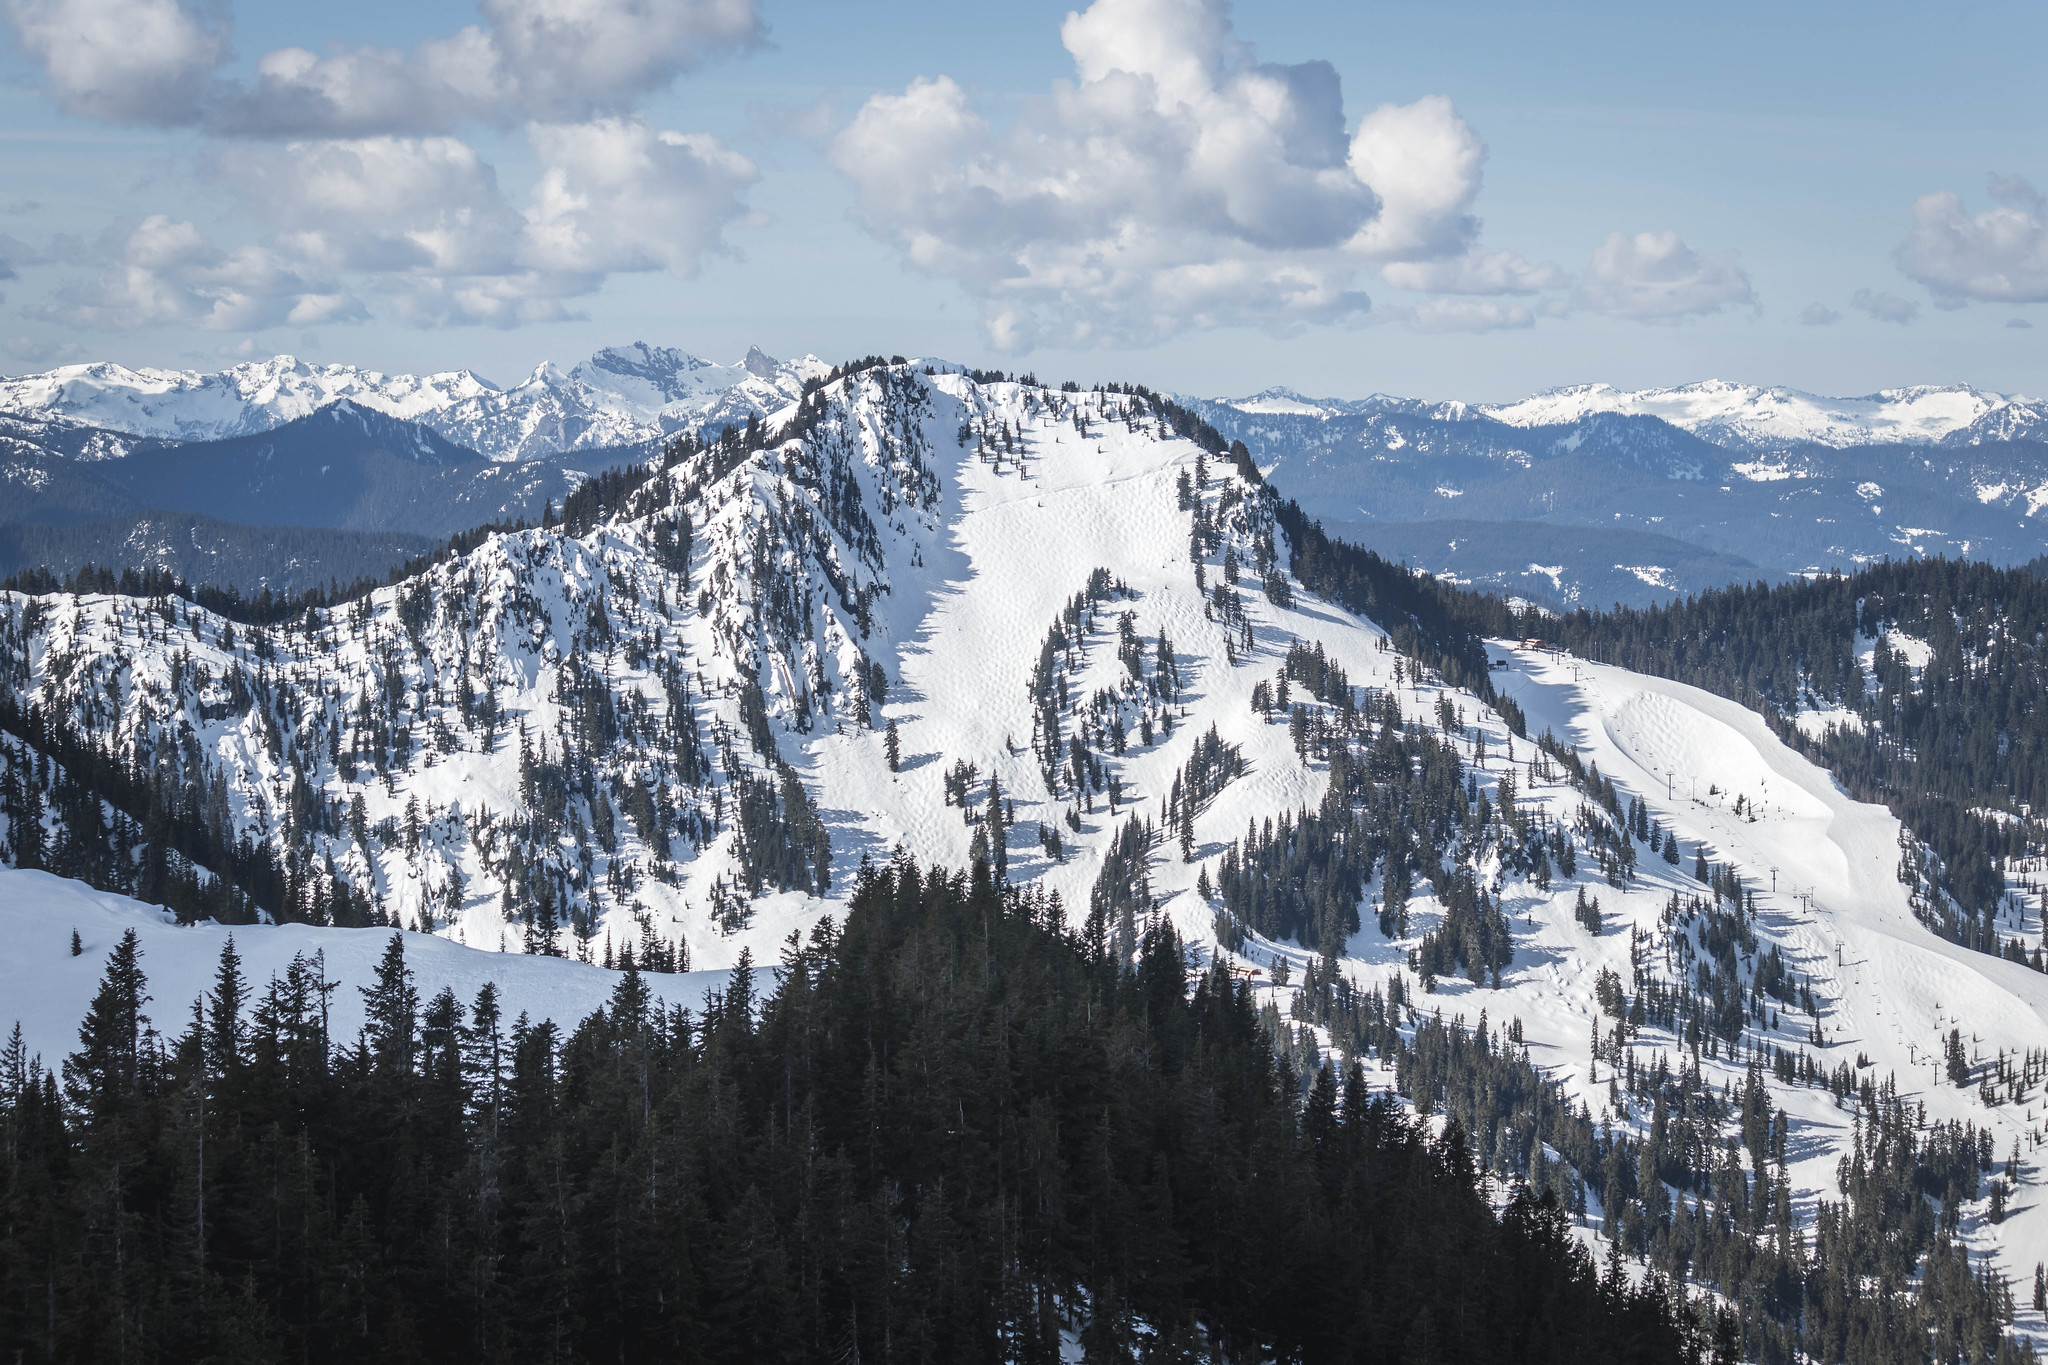 Cowboy Mountain above Stevens Pass Ski Resort